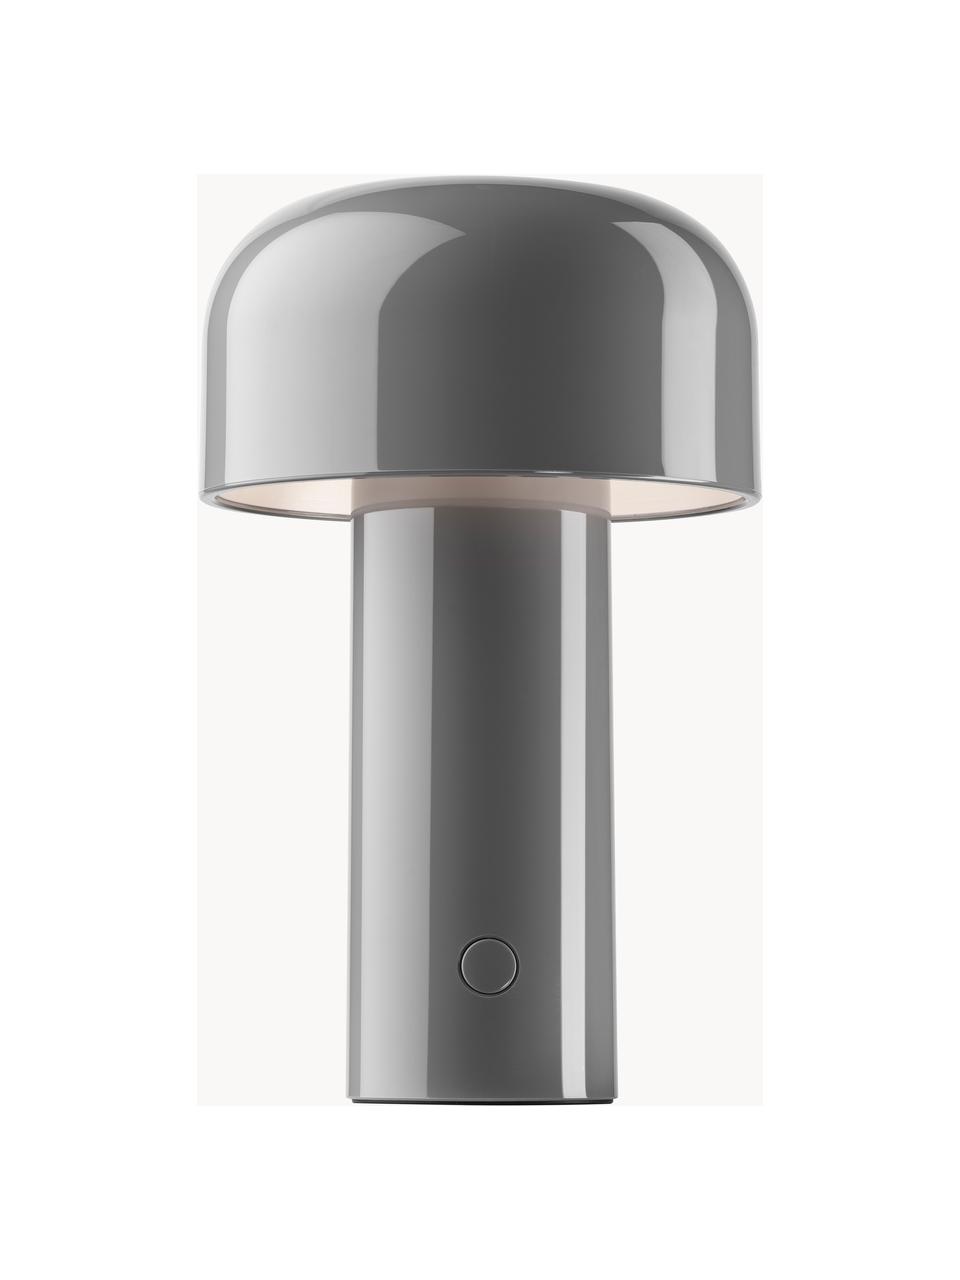 Kleine mobile LED-Tischlampe Bellhop, dimmbar, Kunststoff, Grau, glänzend, Ø 13 x H 20 cm